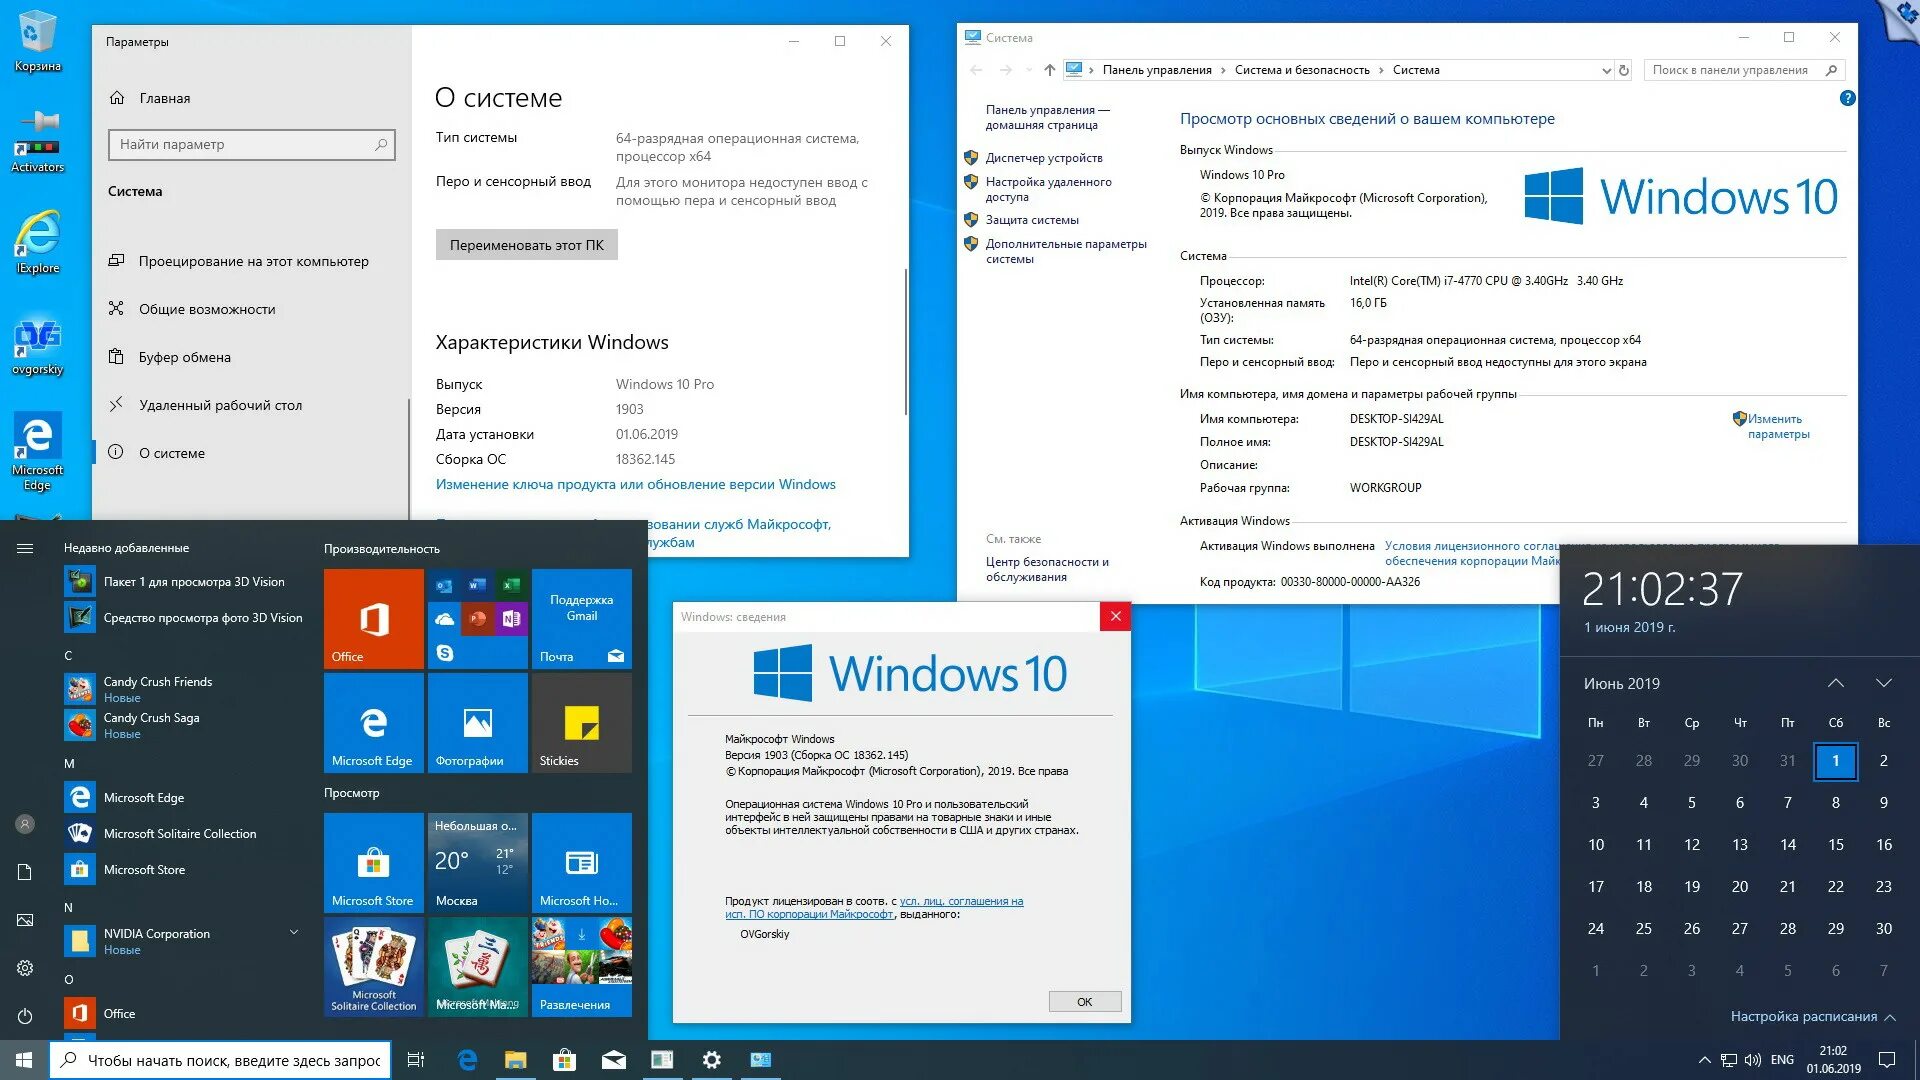 Виндовс 10 информация. Система виндовс 10. ОС виндовс 10. Операционная система Windows 10 Pro. Операционная система Windows 10 Pro x64.